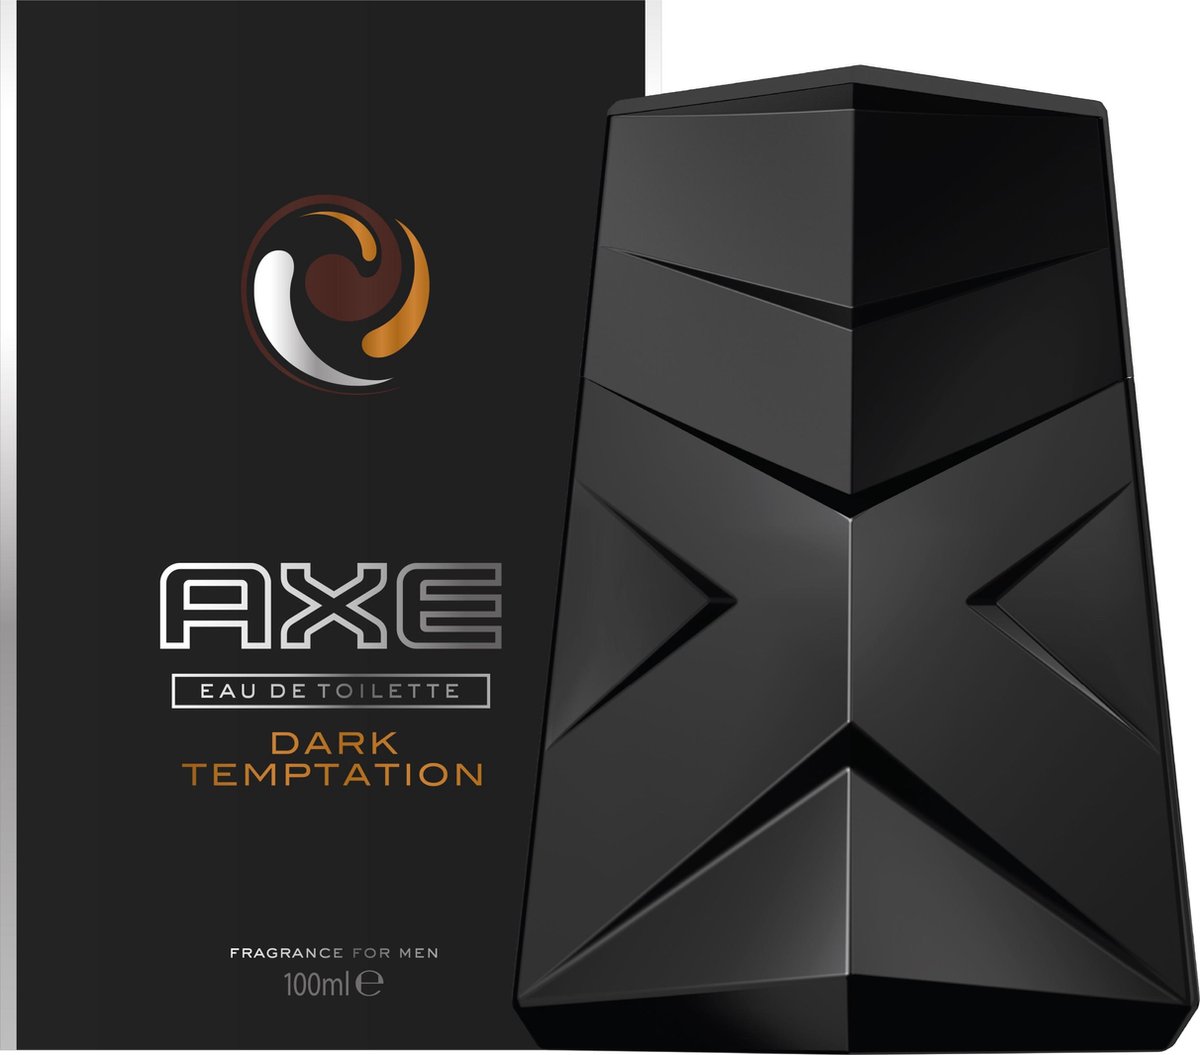 Ingenieurs genoeg tussen Axe Dark Temptation - 50 ml - Eau De Toilette | bol.com